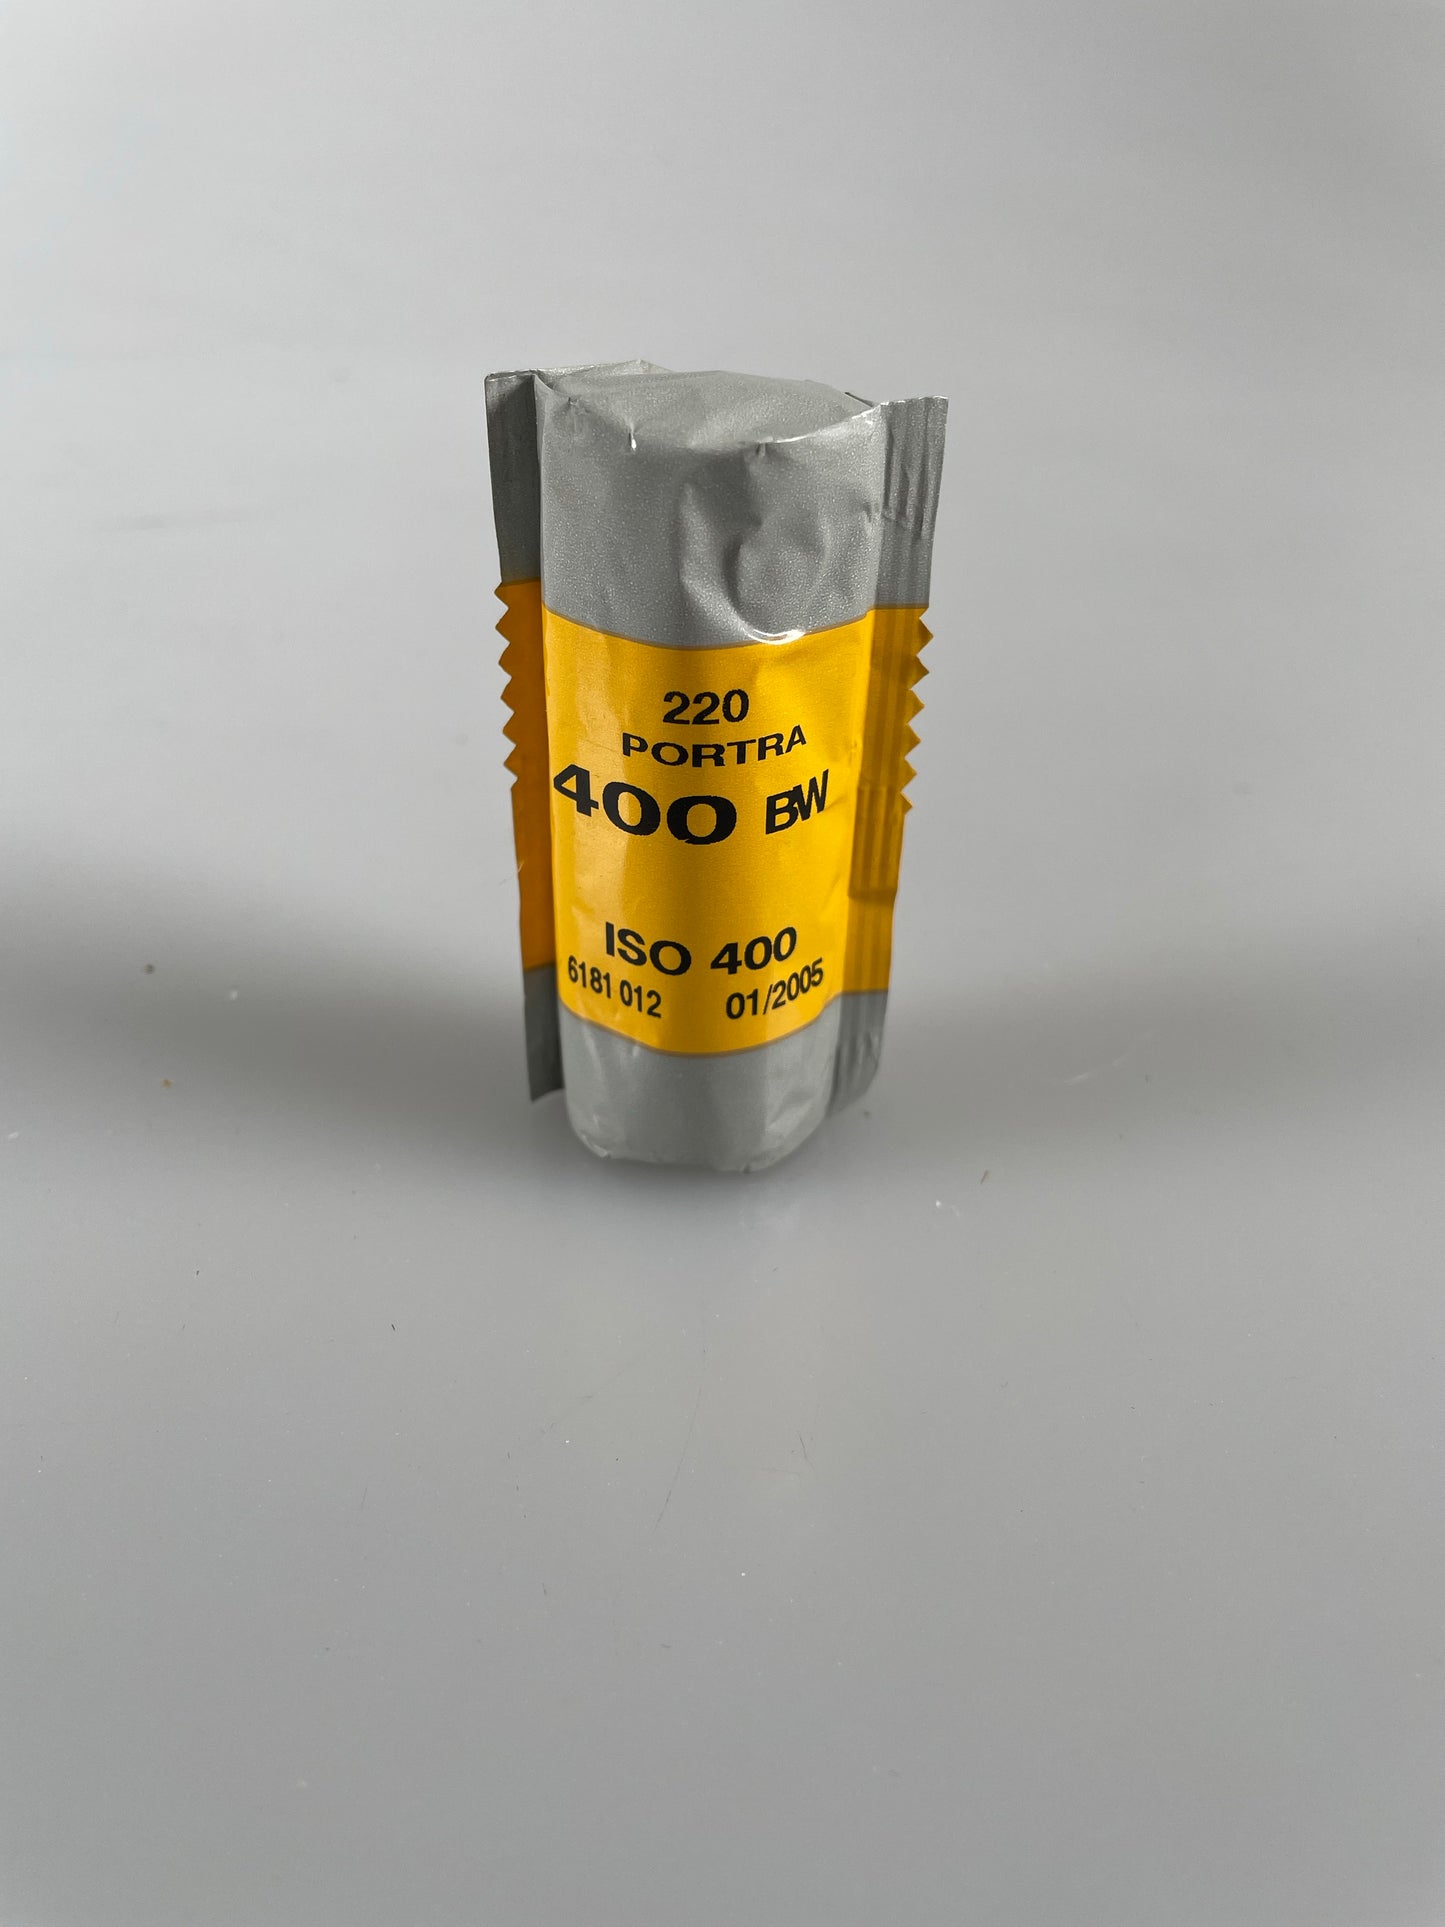 Kodak PORTRA 400BW Black and white B&W 220 ISO 400 1 roll